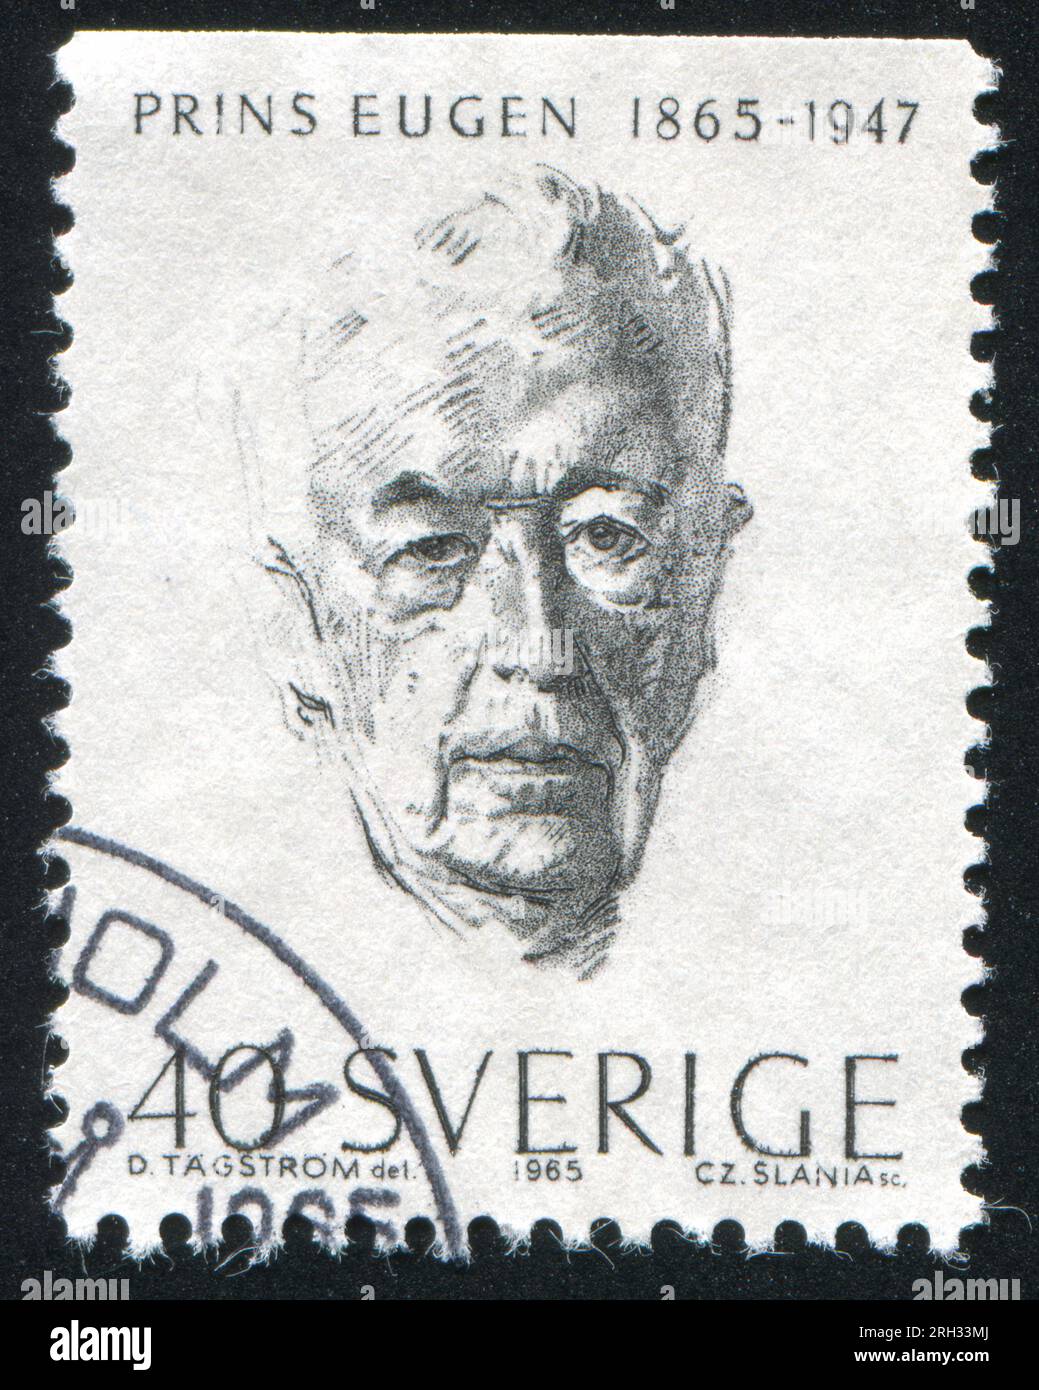 SWEDEN - CIRCA 1965: stamp printed by Sweden, shows Prince Eugen, circa 1965 Stock Photo